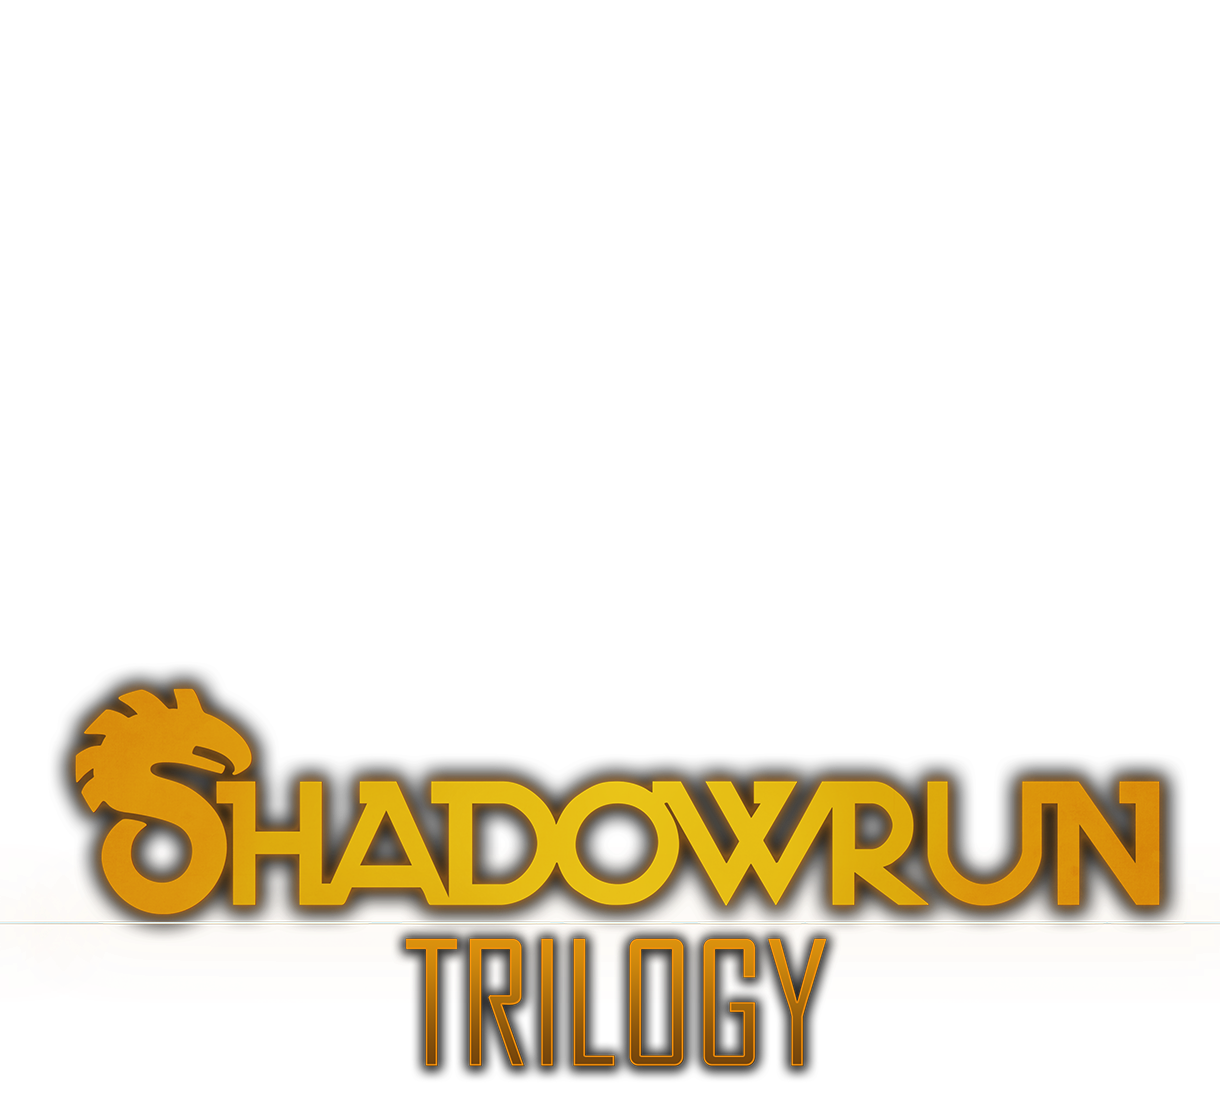 Shadowrun: Trilogy logotype